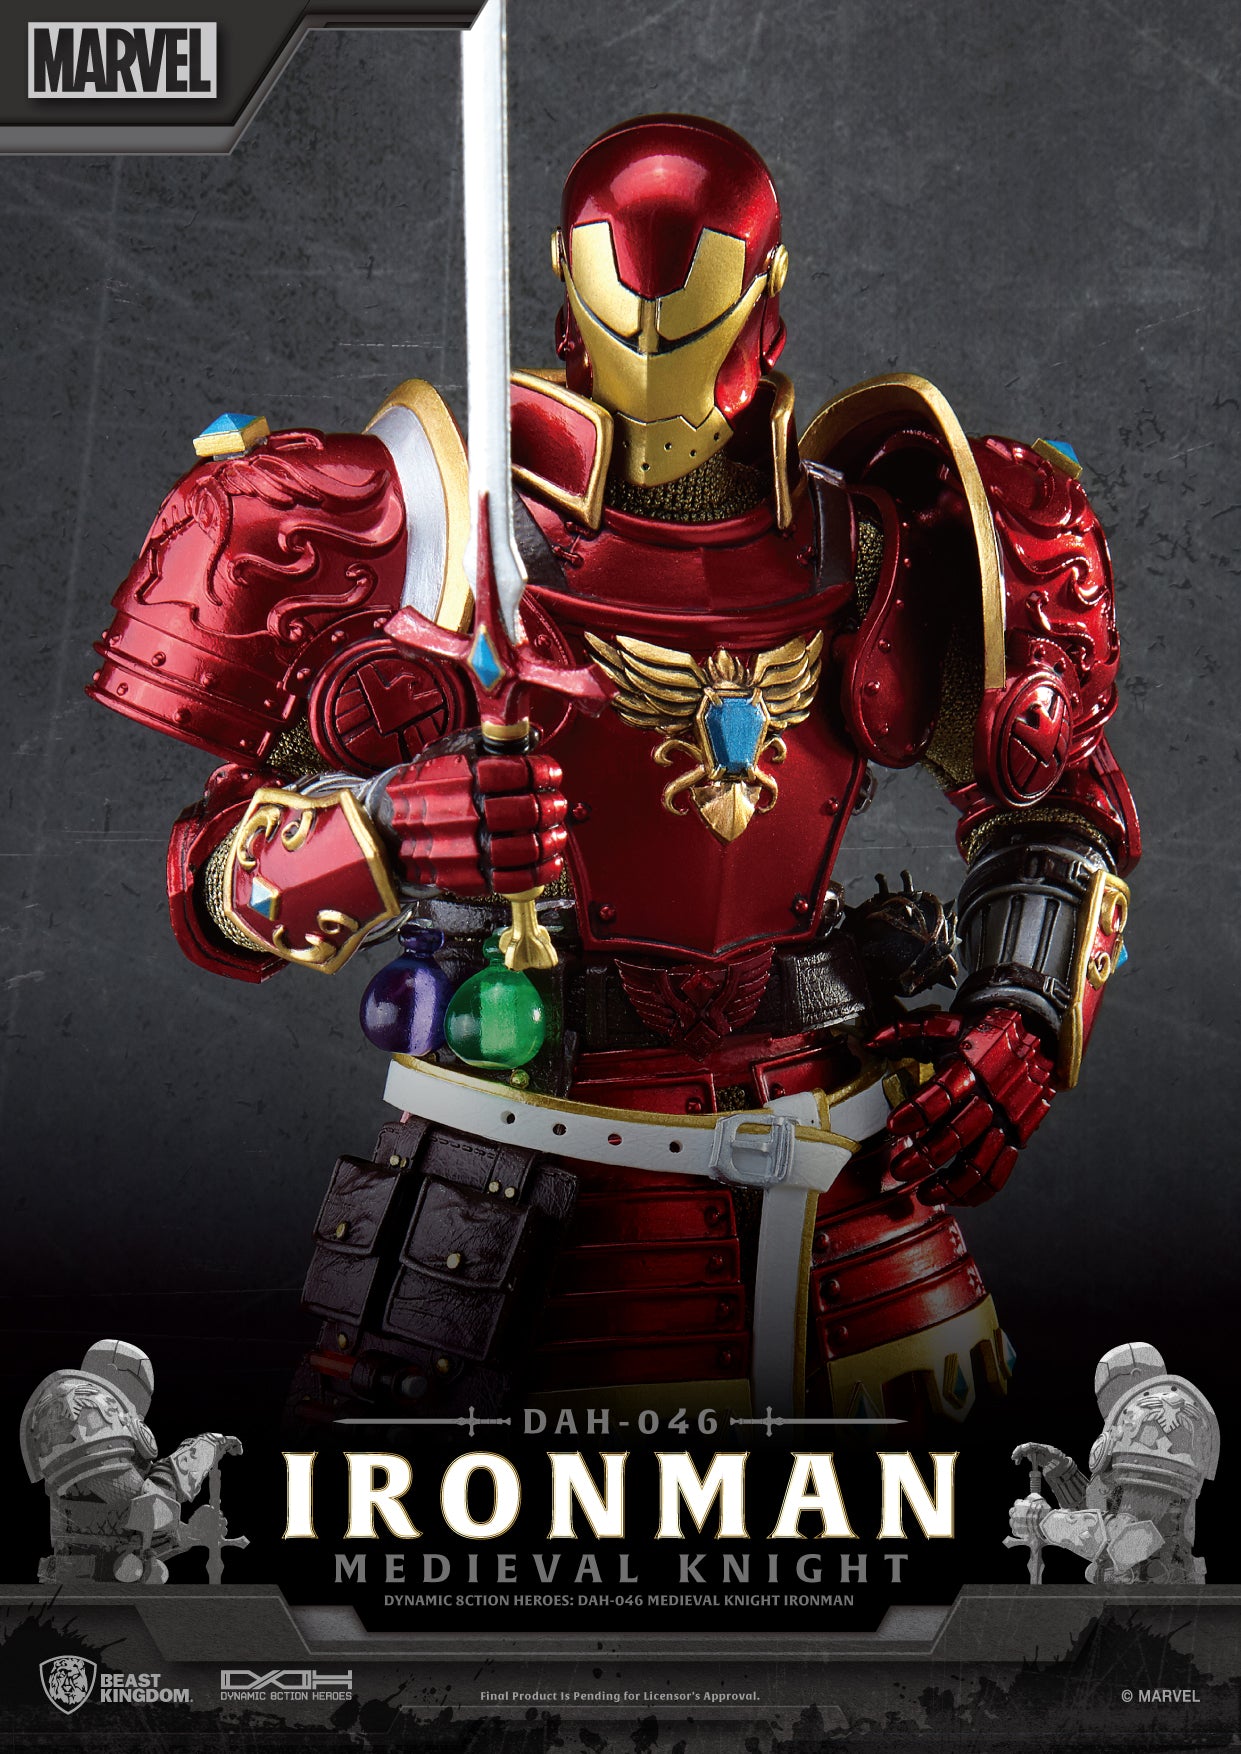 Beast Kingdom Dynamic Action Heroes: Marvel - Iron Man Caballero Medieval